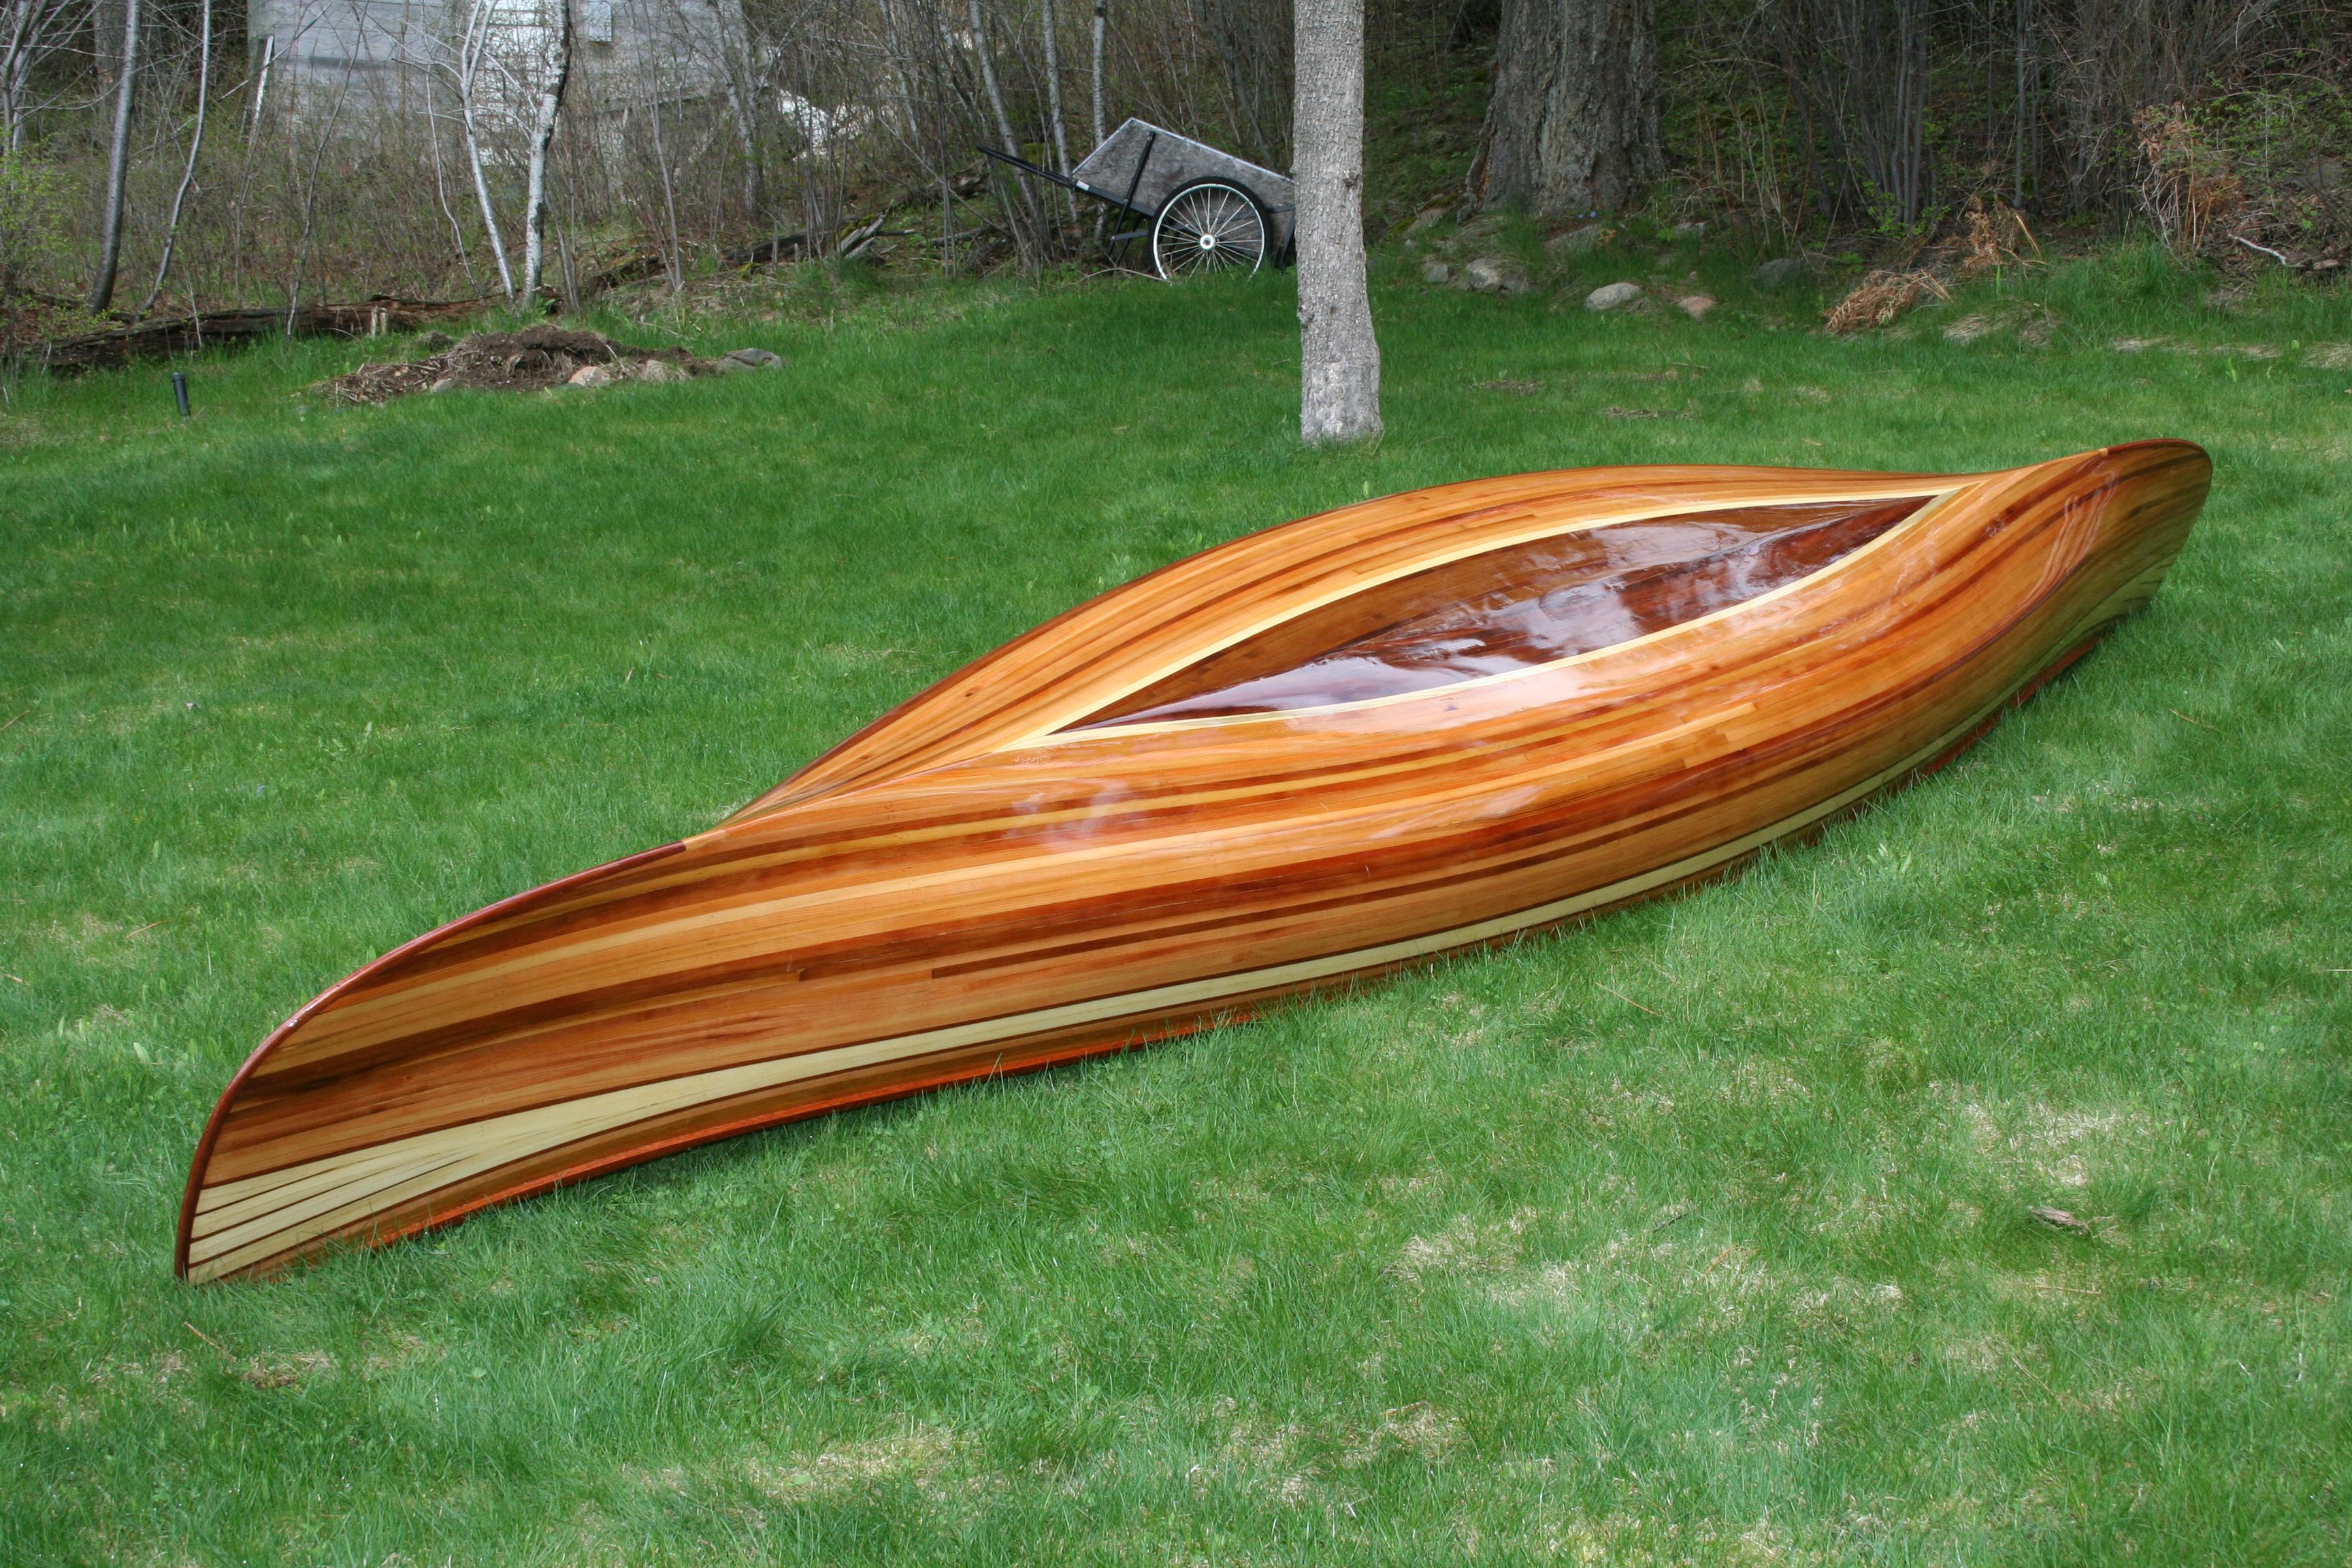 woodworking plans wood strip canoe pdf plans